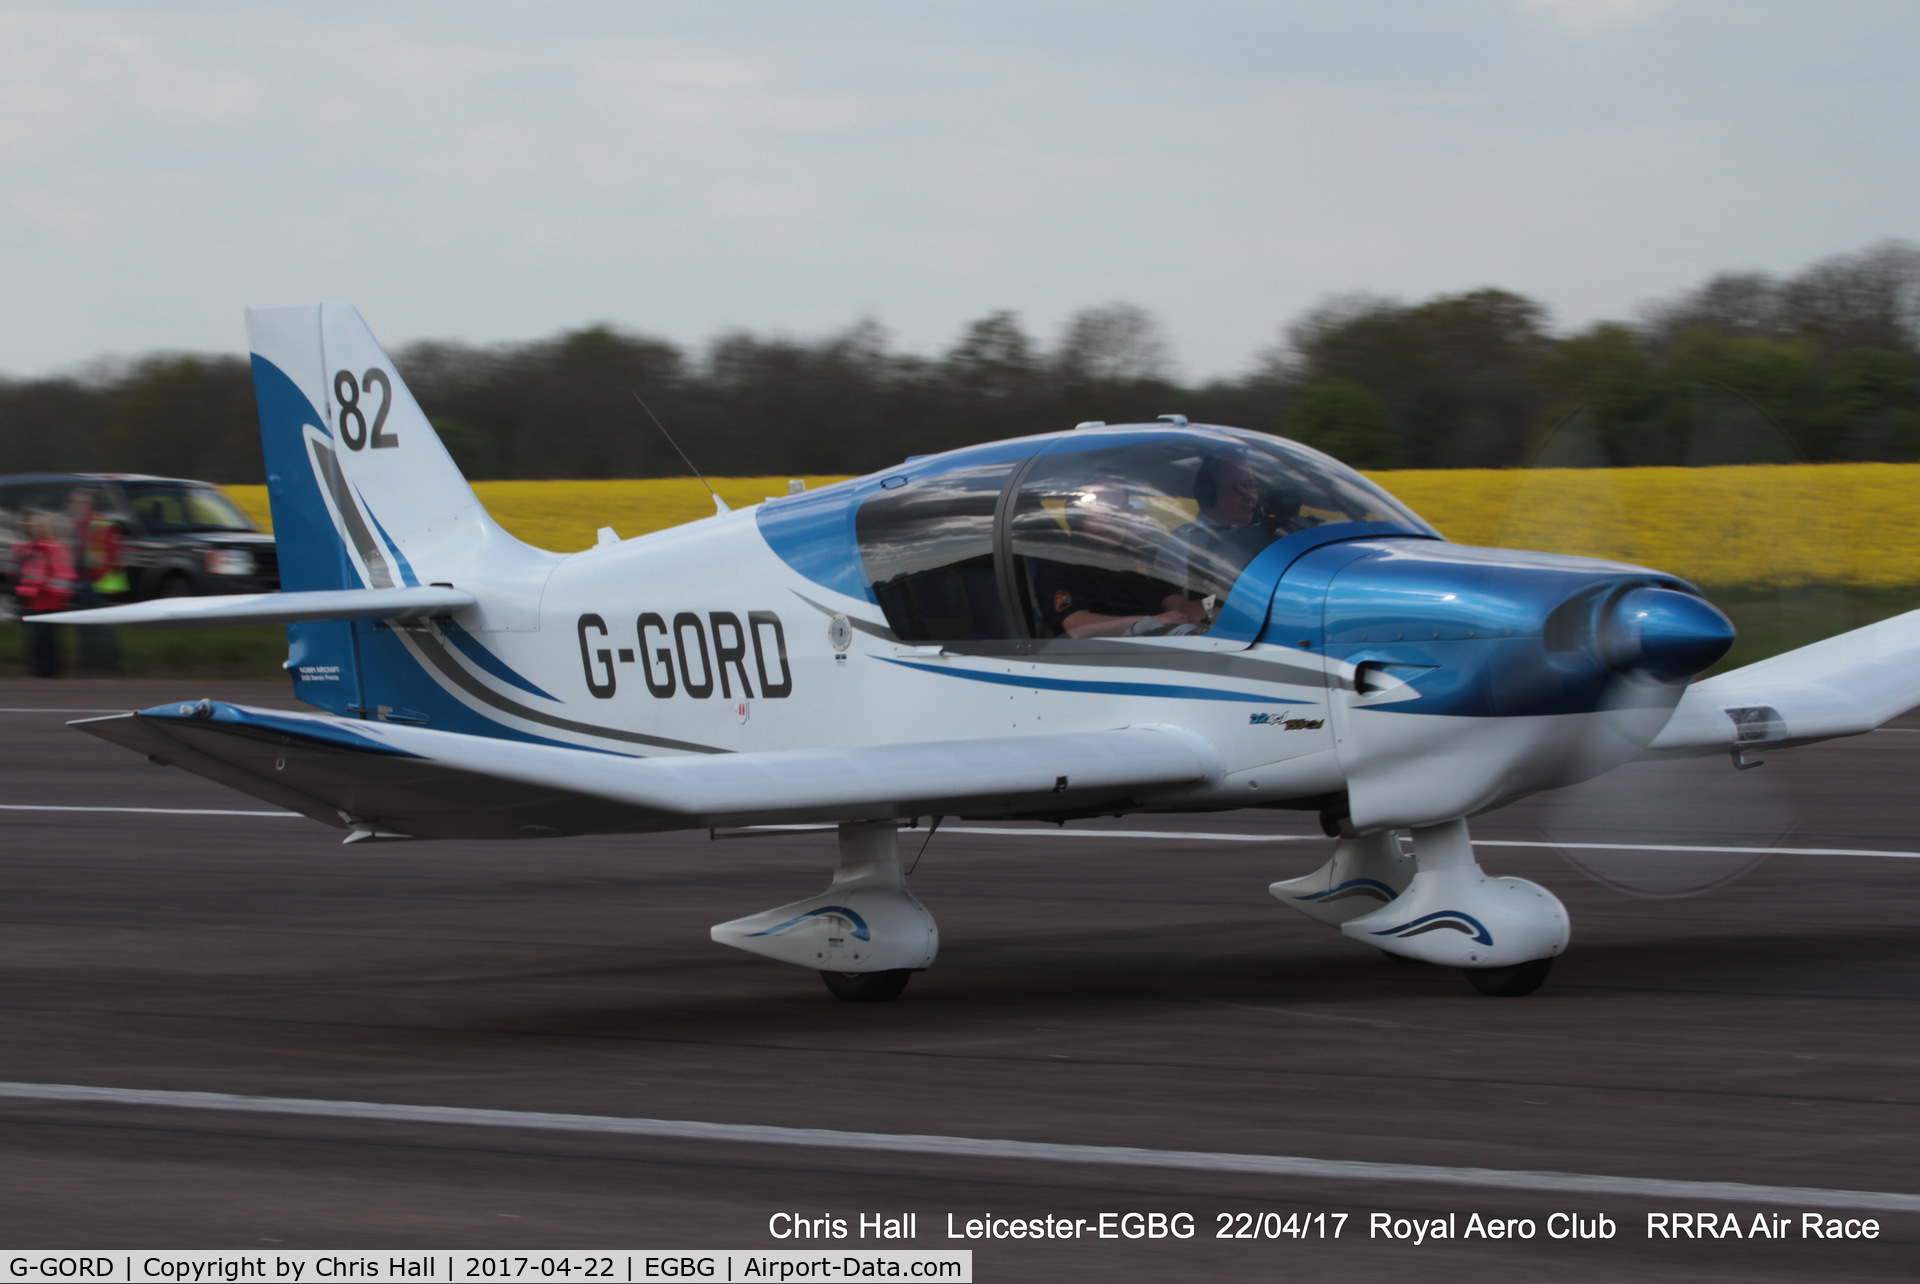 G-GORD, 2014 Robin DR-400-140B Major Major C/N 2669, Royal Aero Club 3R's air race